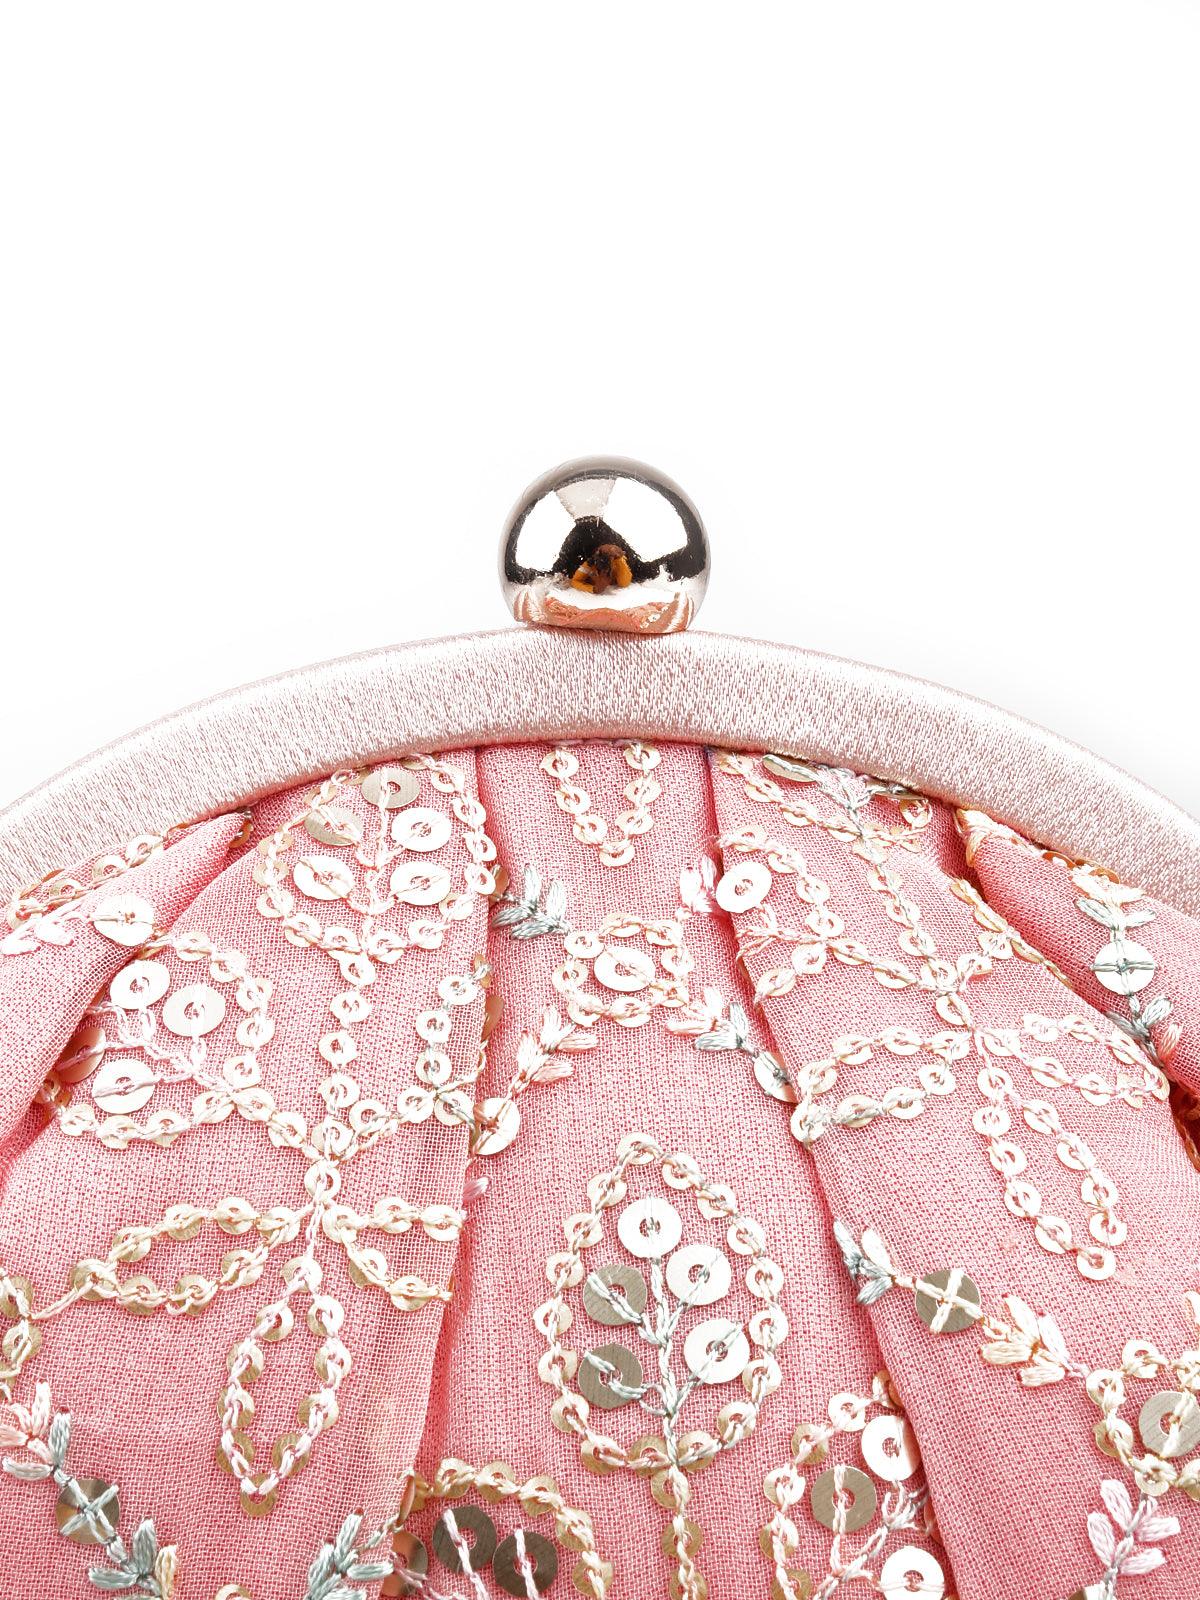 Pink floral sophisticated clutch for women - Odette